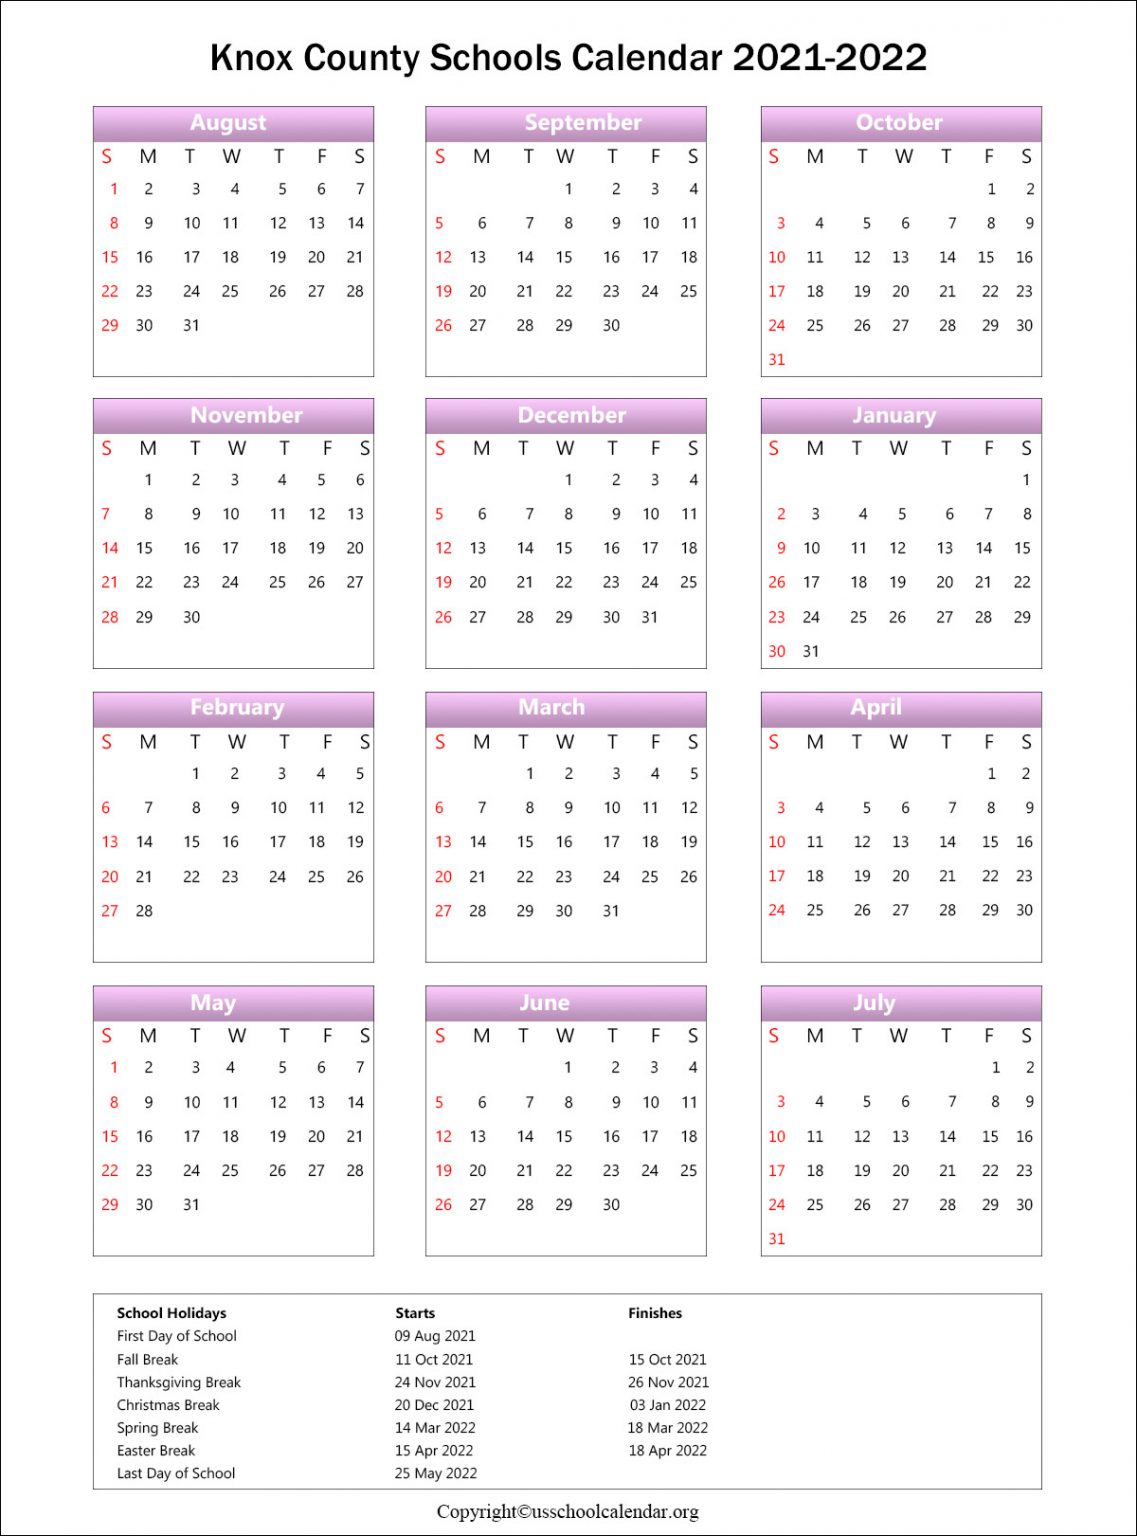 Knox County Schools Calendar with Holidays 2021 2022